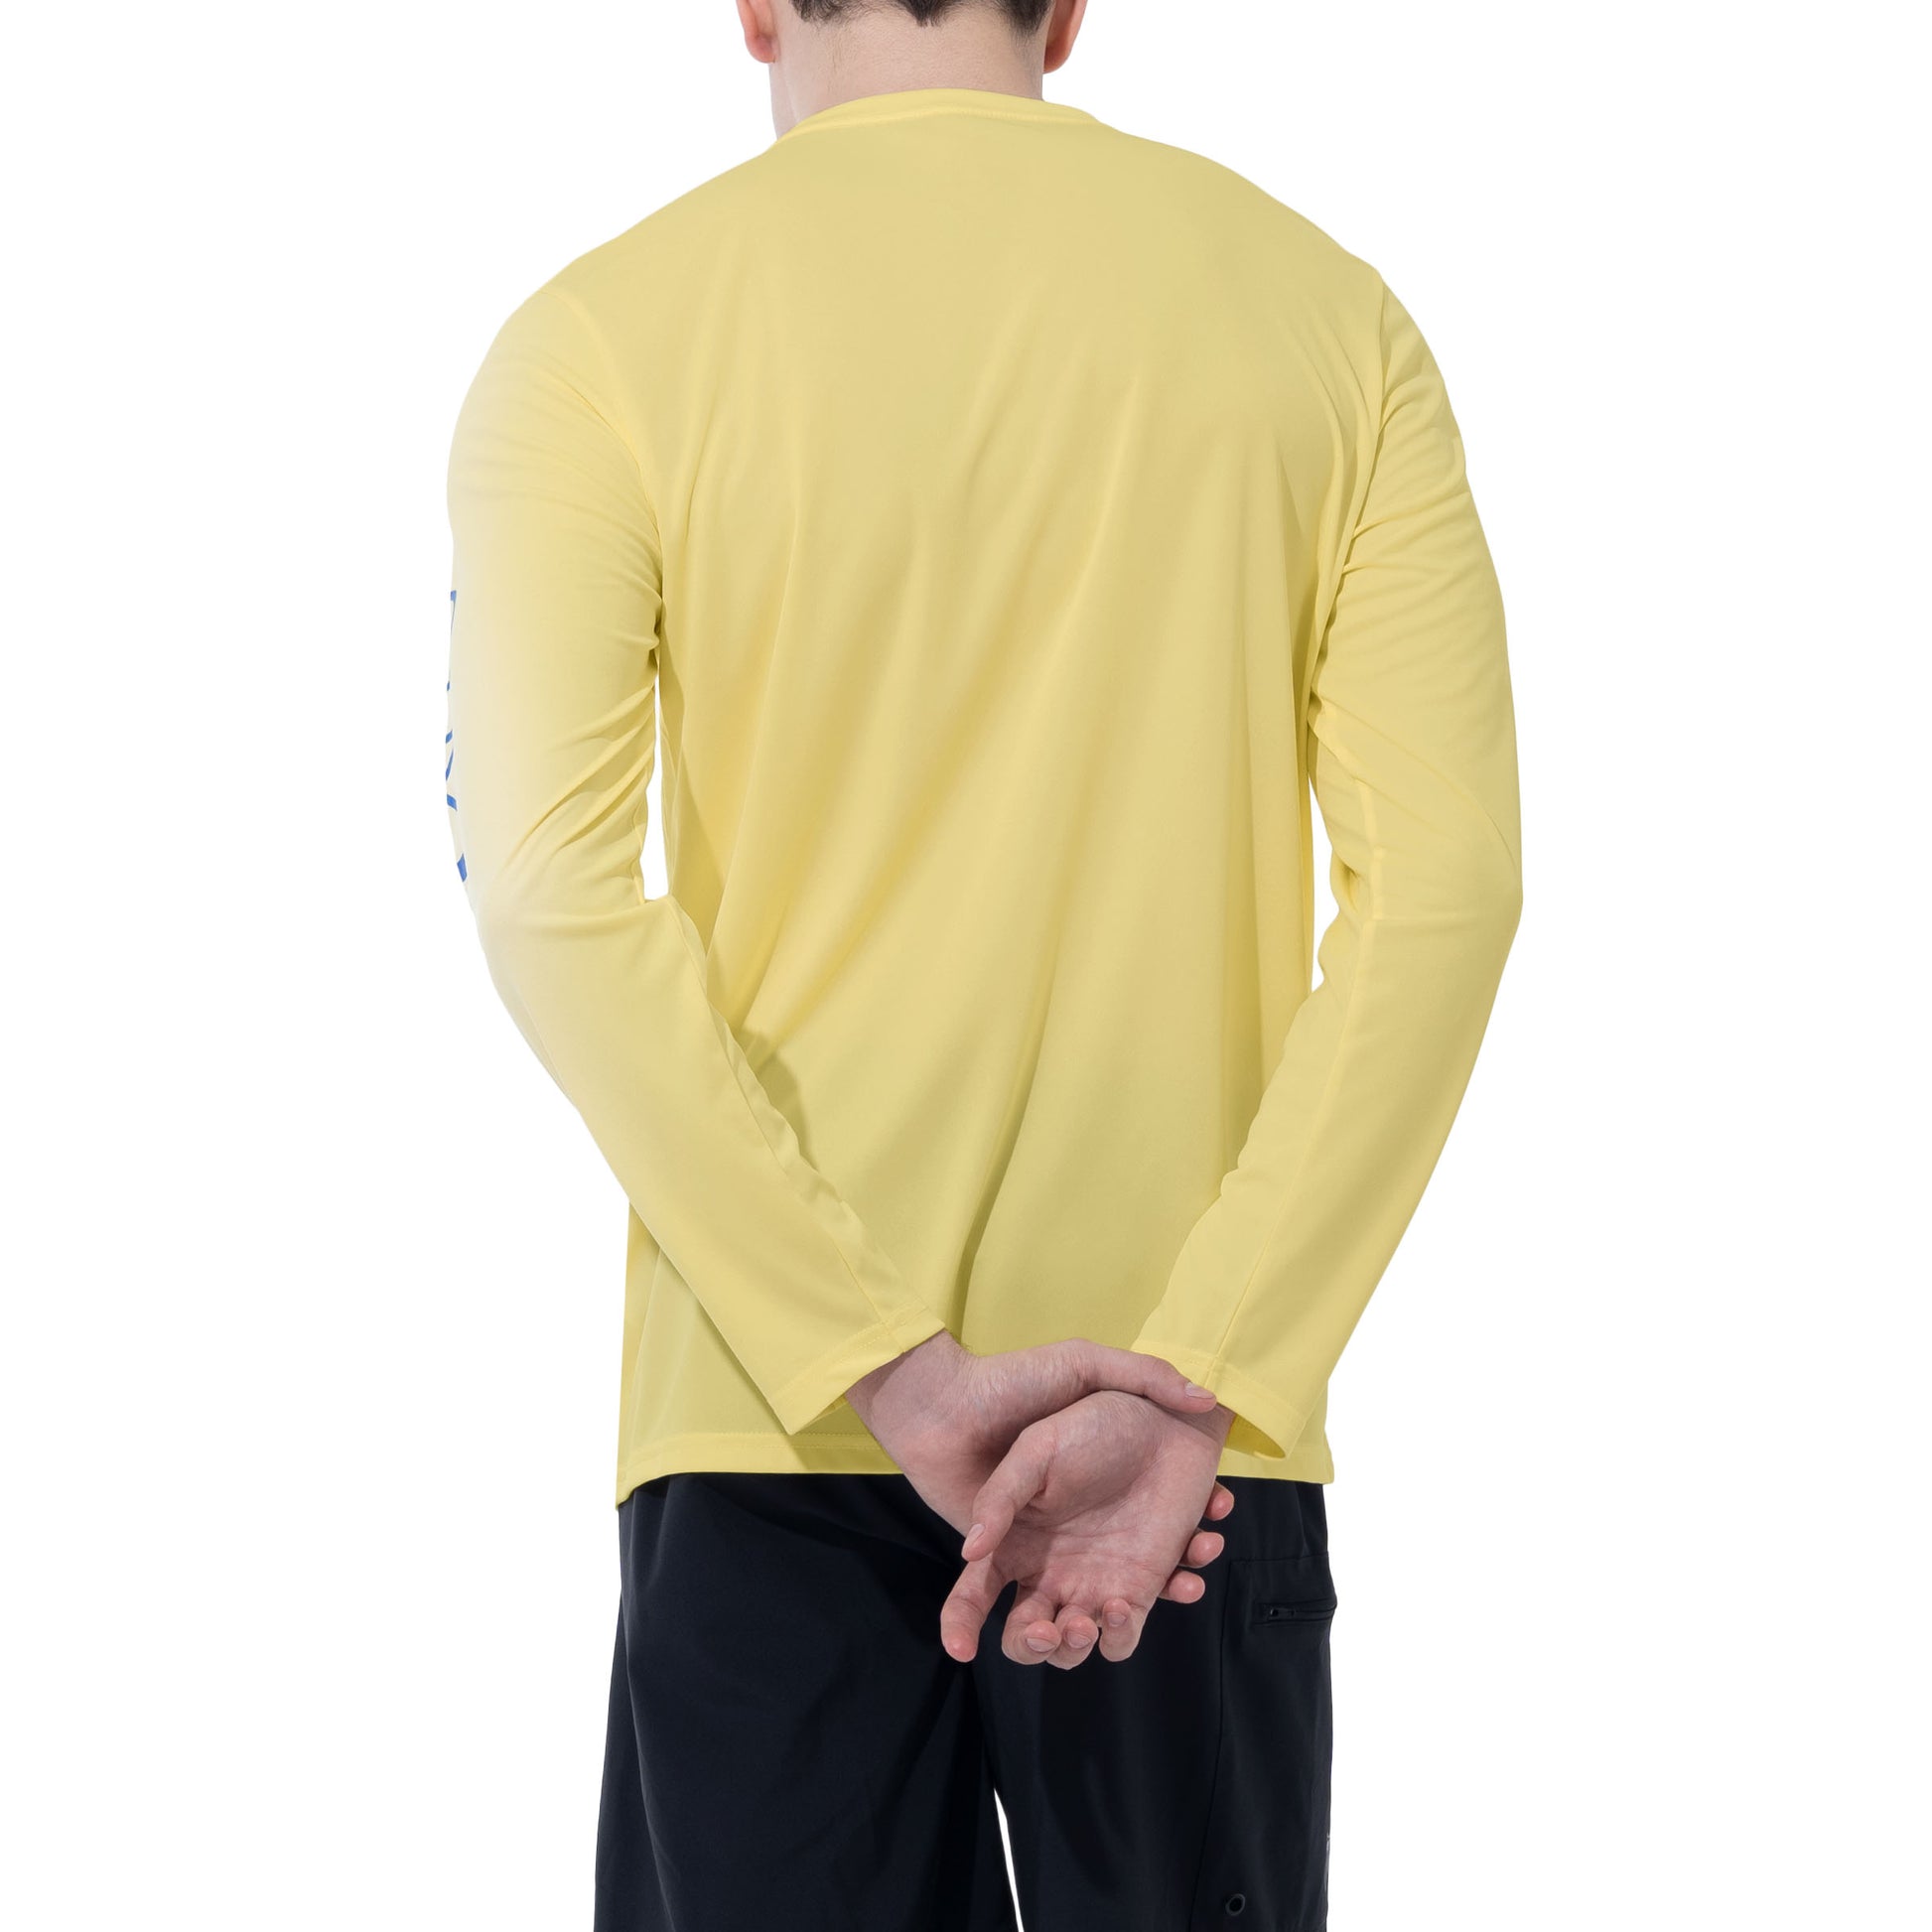 Guy Harvey Men's Long Sleeve Performance Sun Protection Shirt UPF 50+